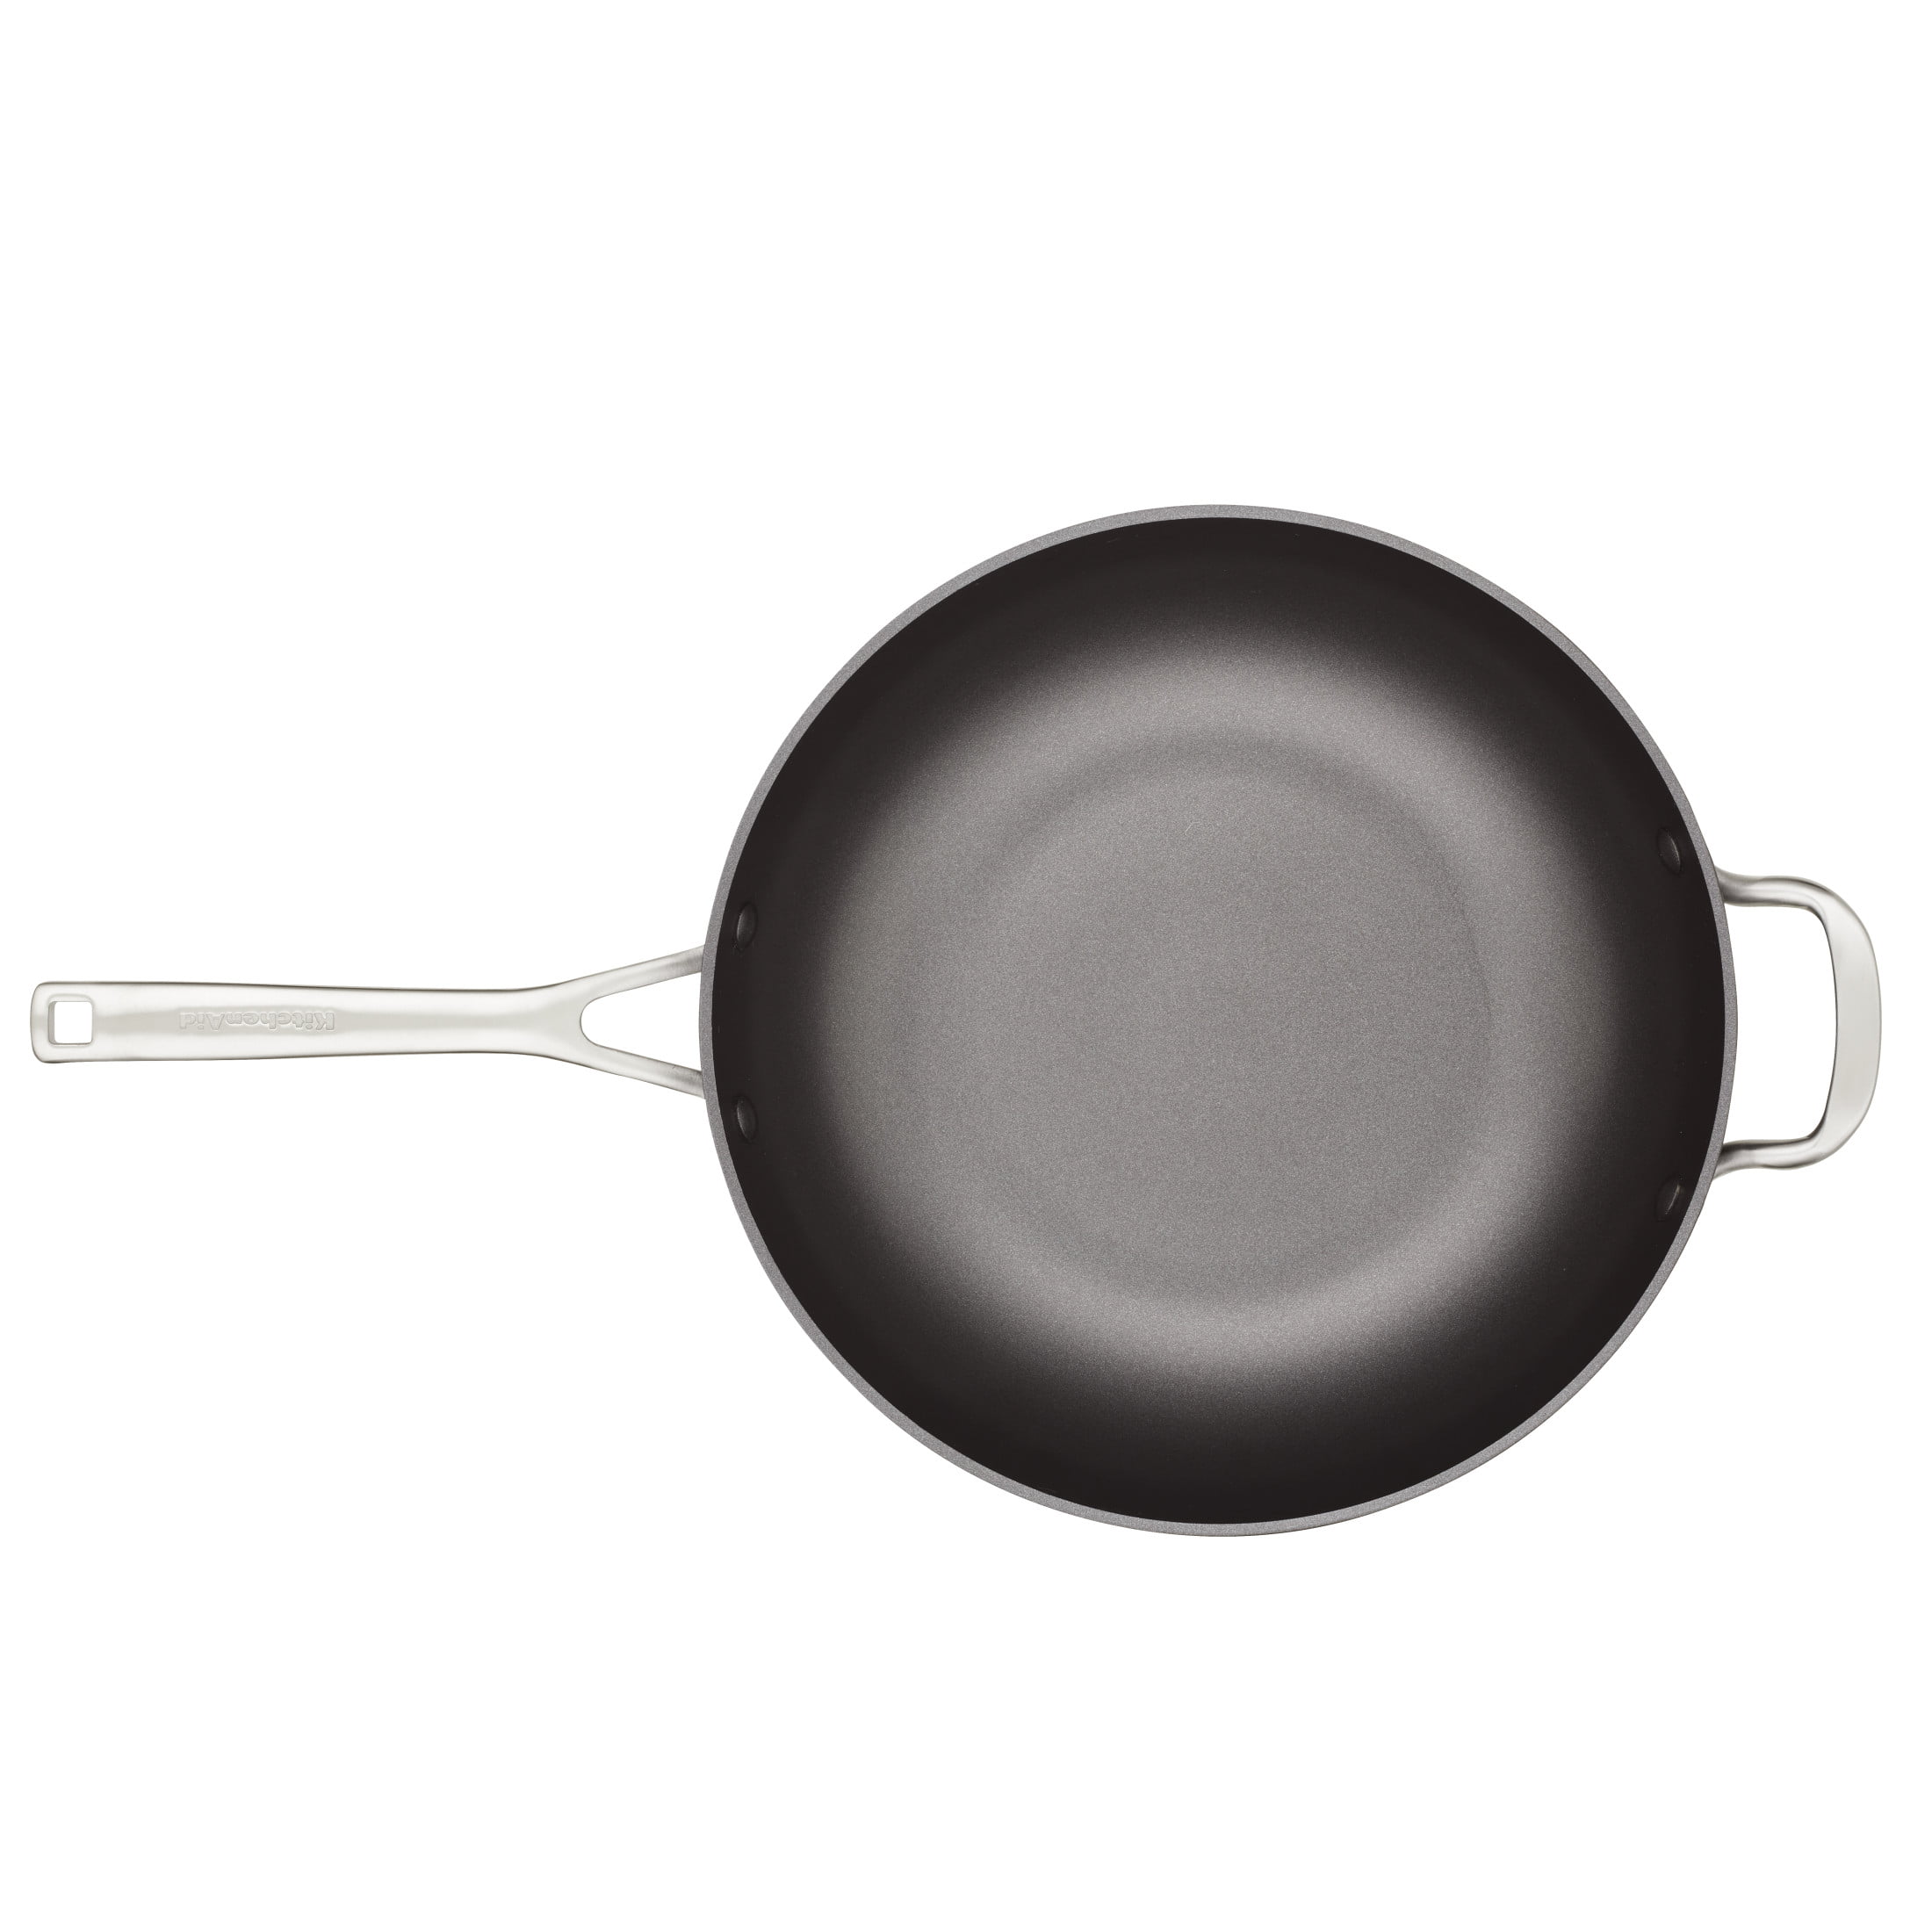 100% Genuine KitchenAid 20 24 26 28 cm Non-stick Stir Fry Square